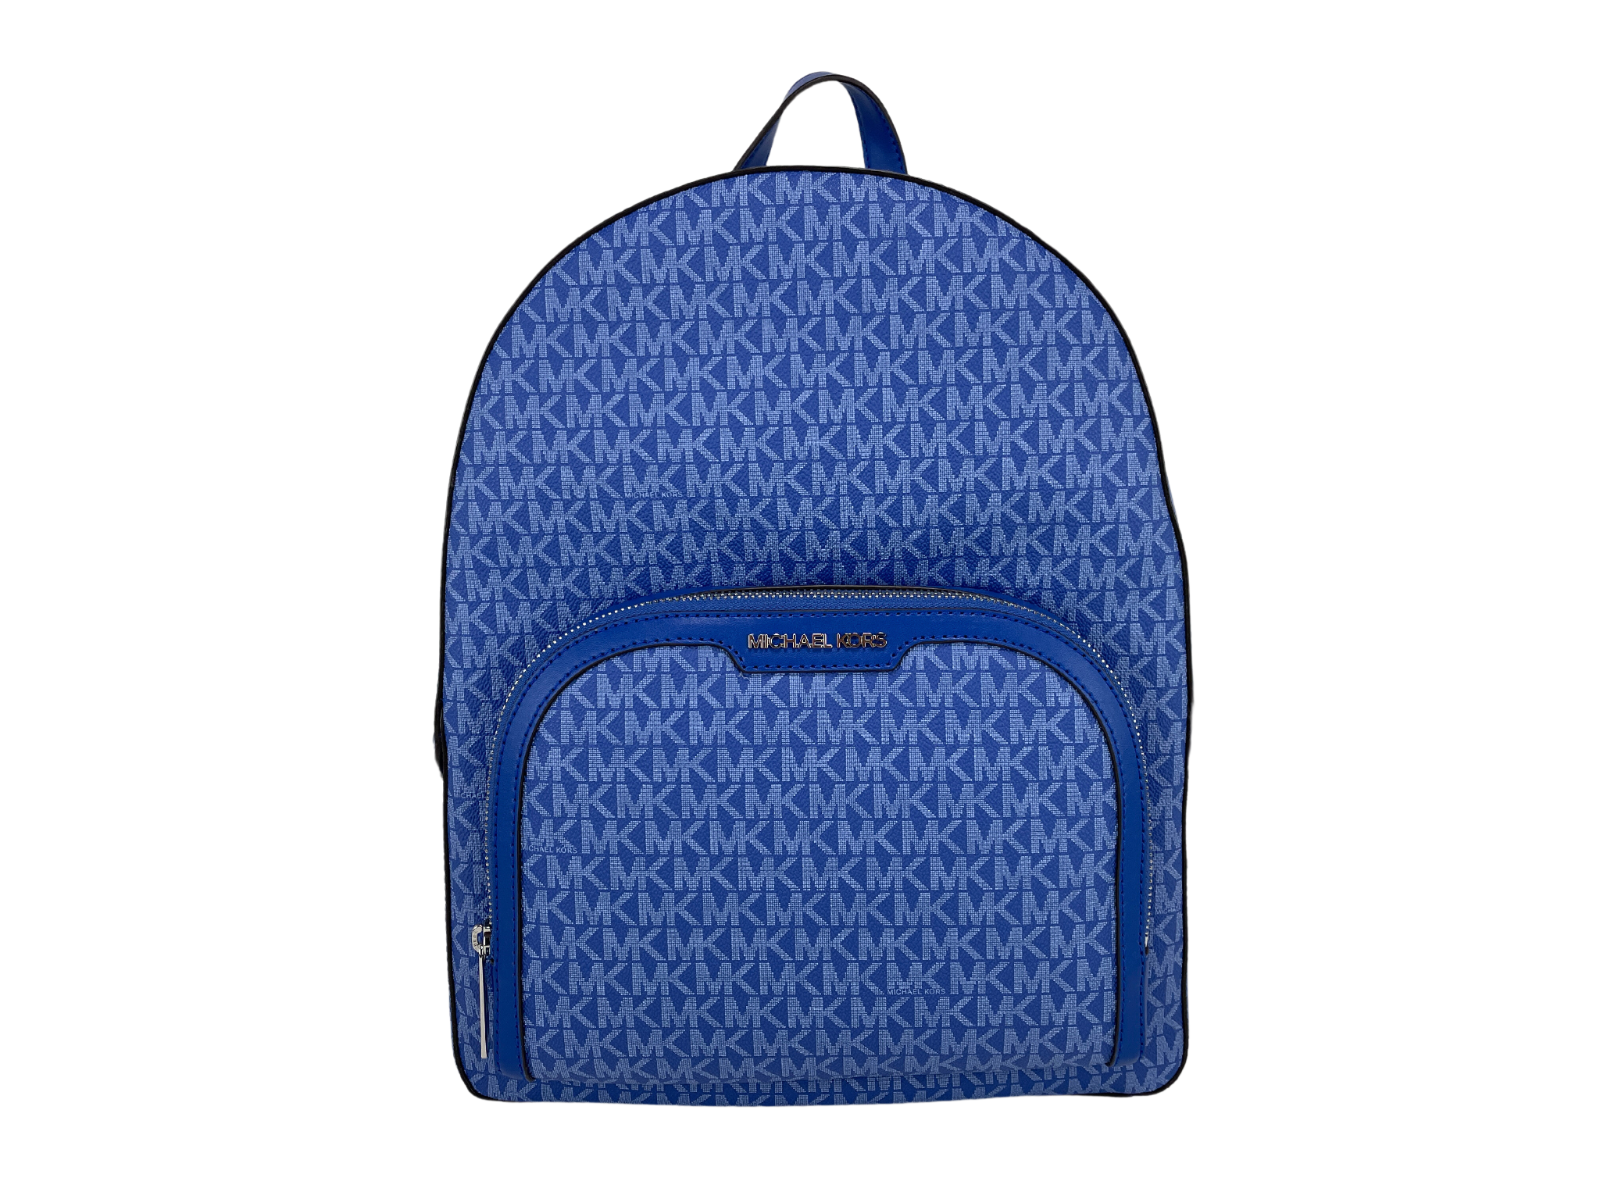 Michael Kors Jaycee Electric Blue Large Zip Pocket Backpack Bookbag Bag